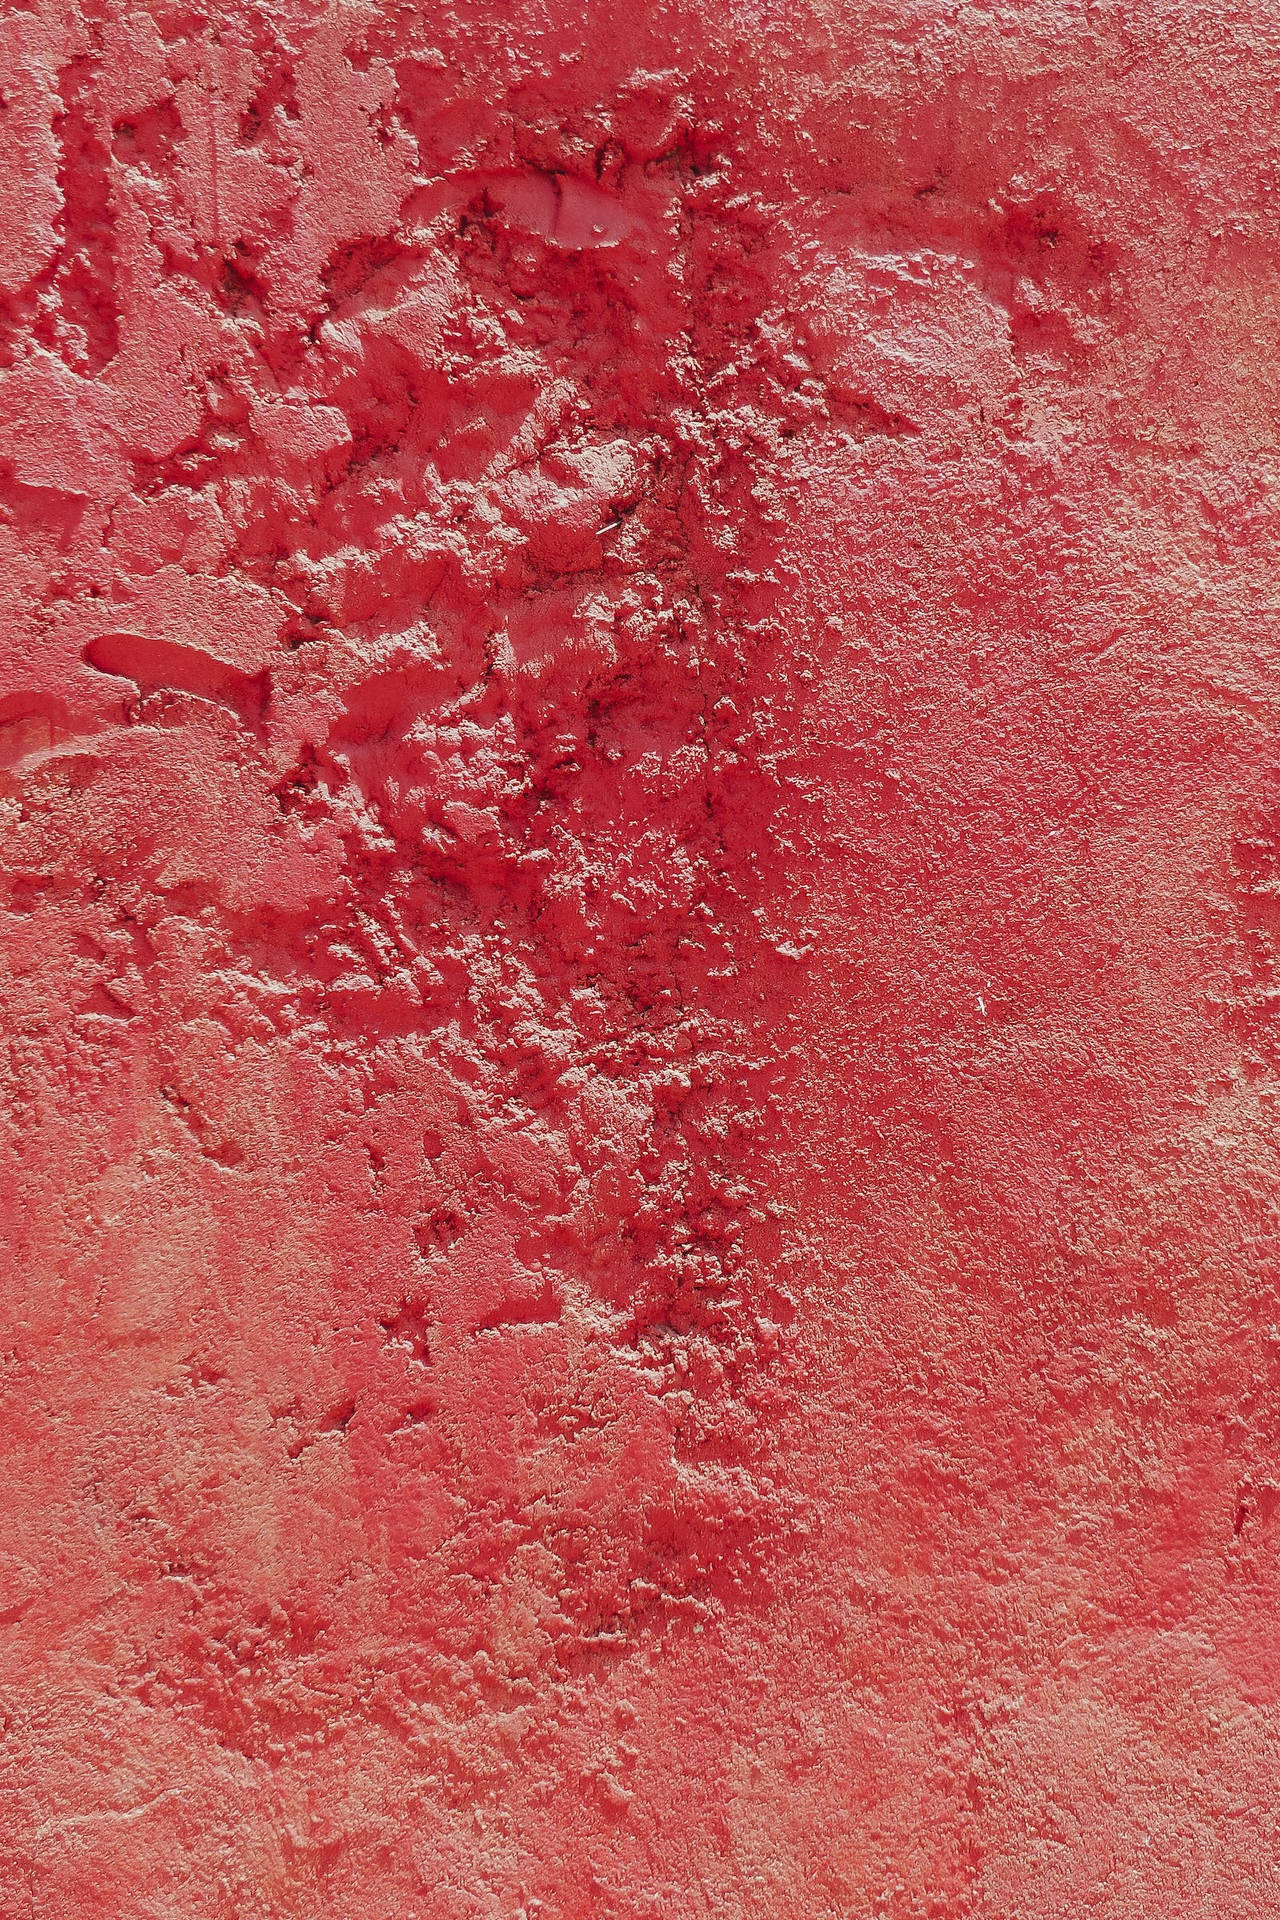 Plain Red Stucco Wall Wallpaper